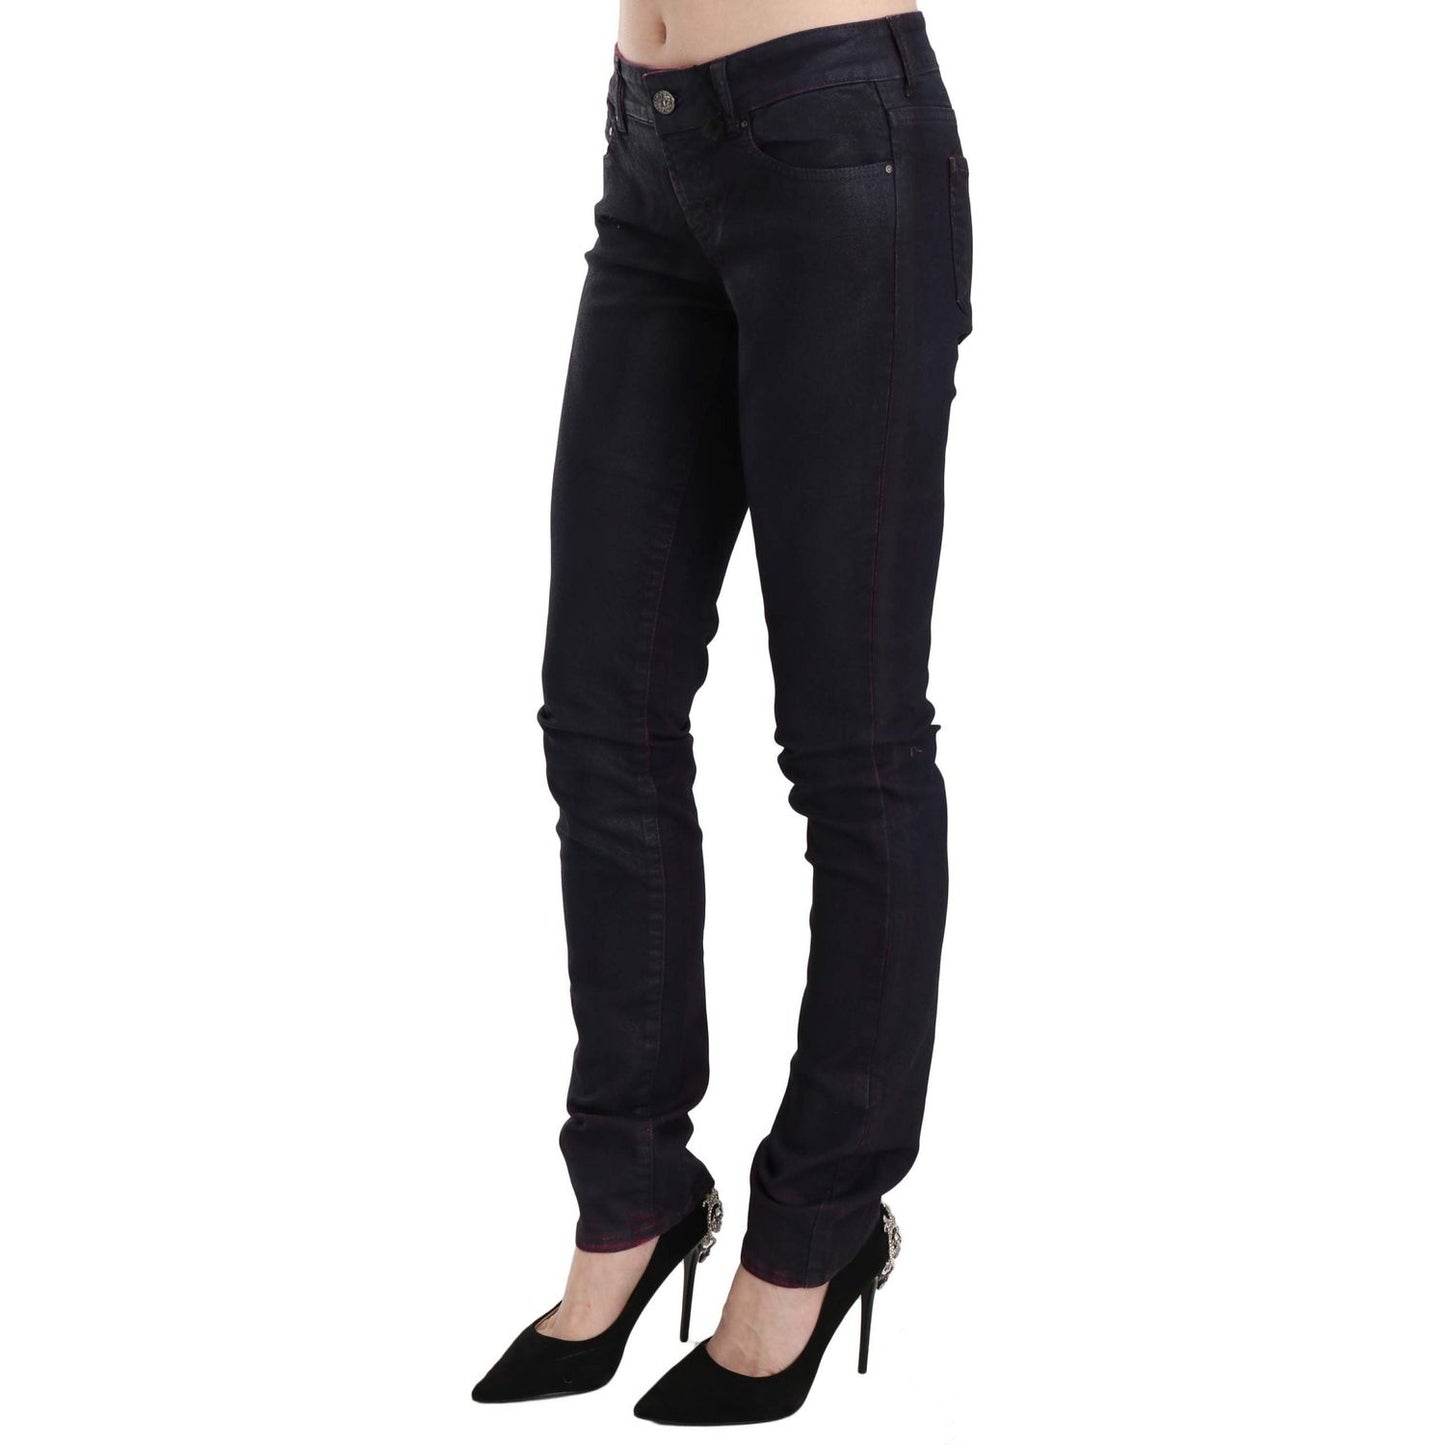 Just Cavalli Chic Black Low Waist Skinny Denim black-cotton-low-waist-skinny-denim-pants Jeans & Pants IMG_5932-scaled-ff560445-cd9.jpg